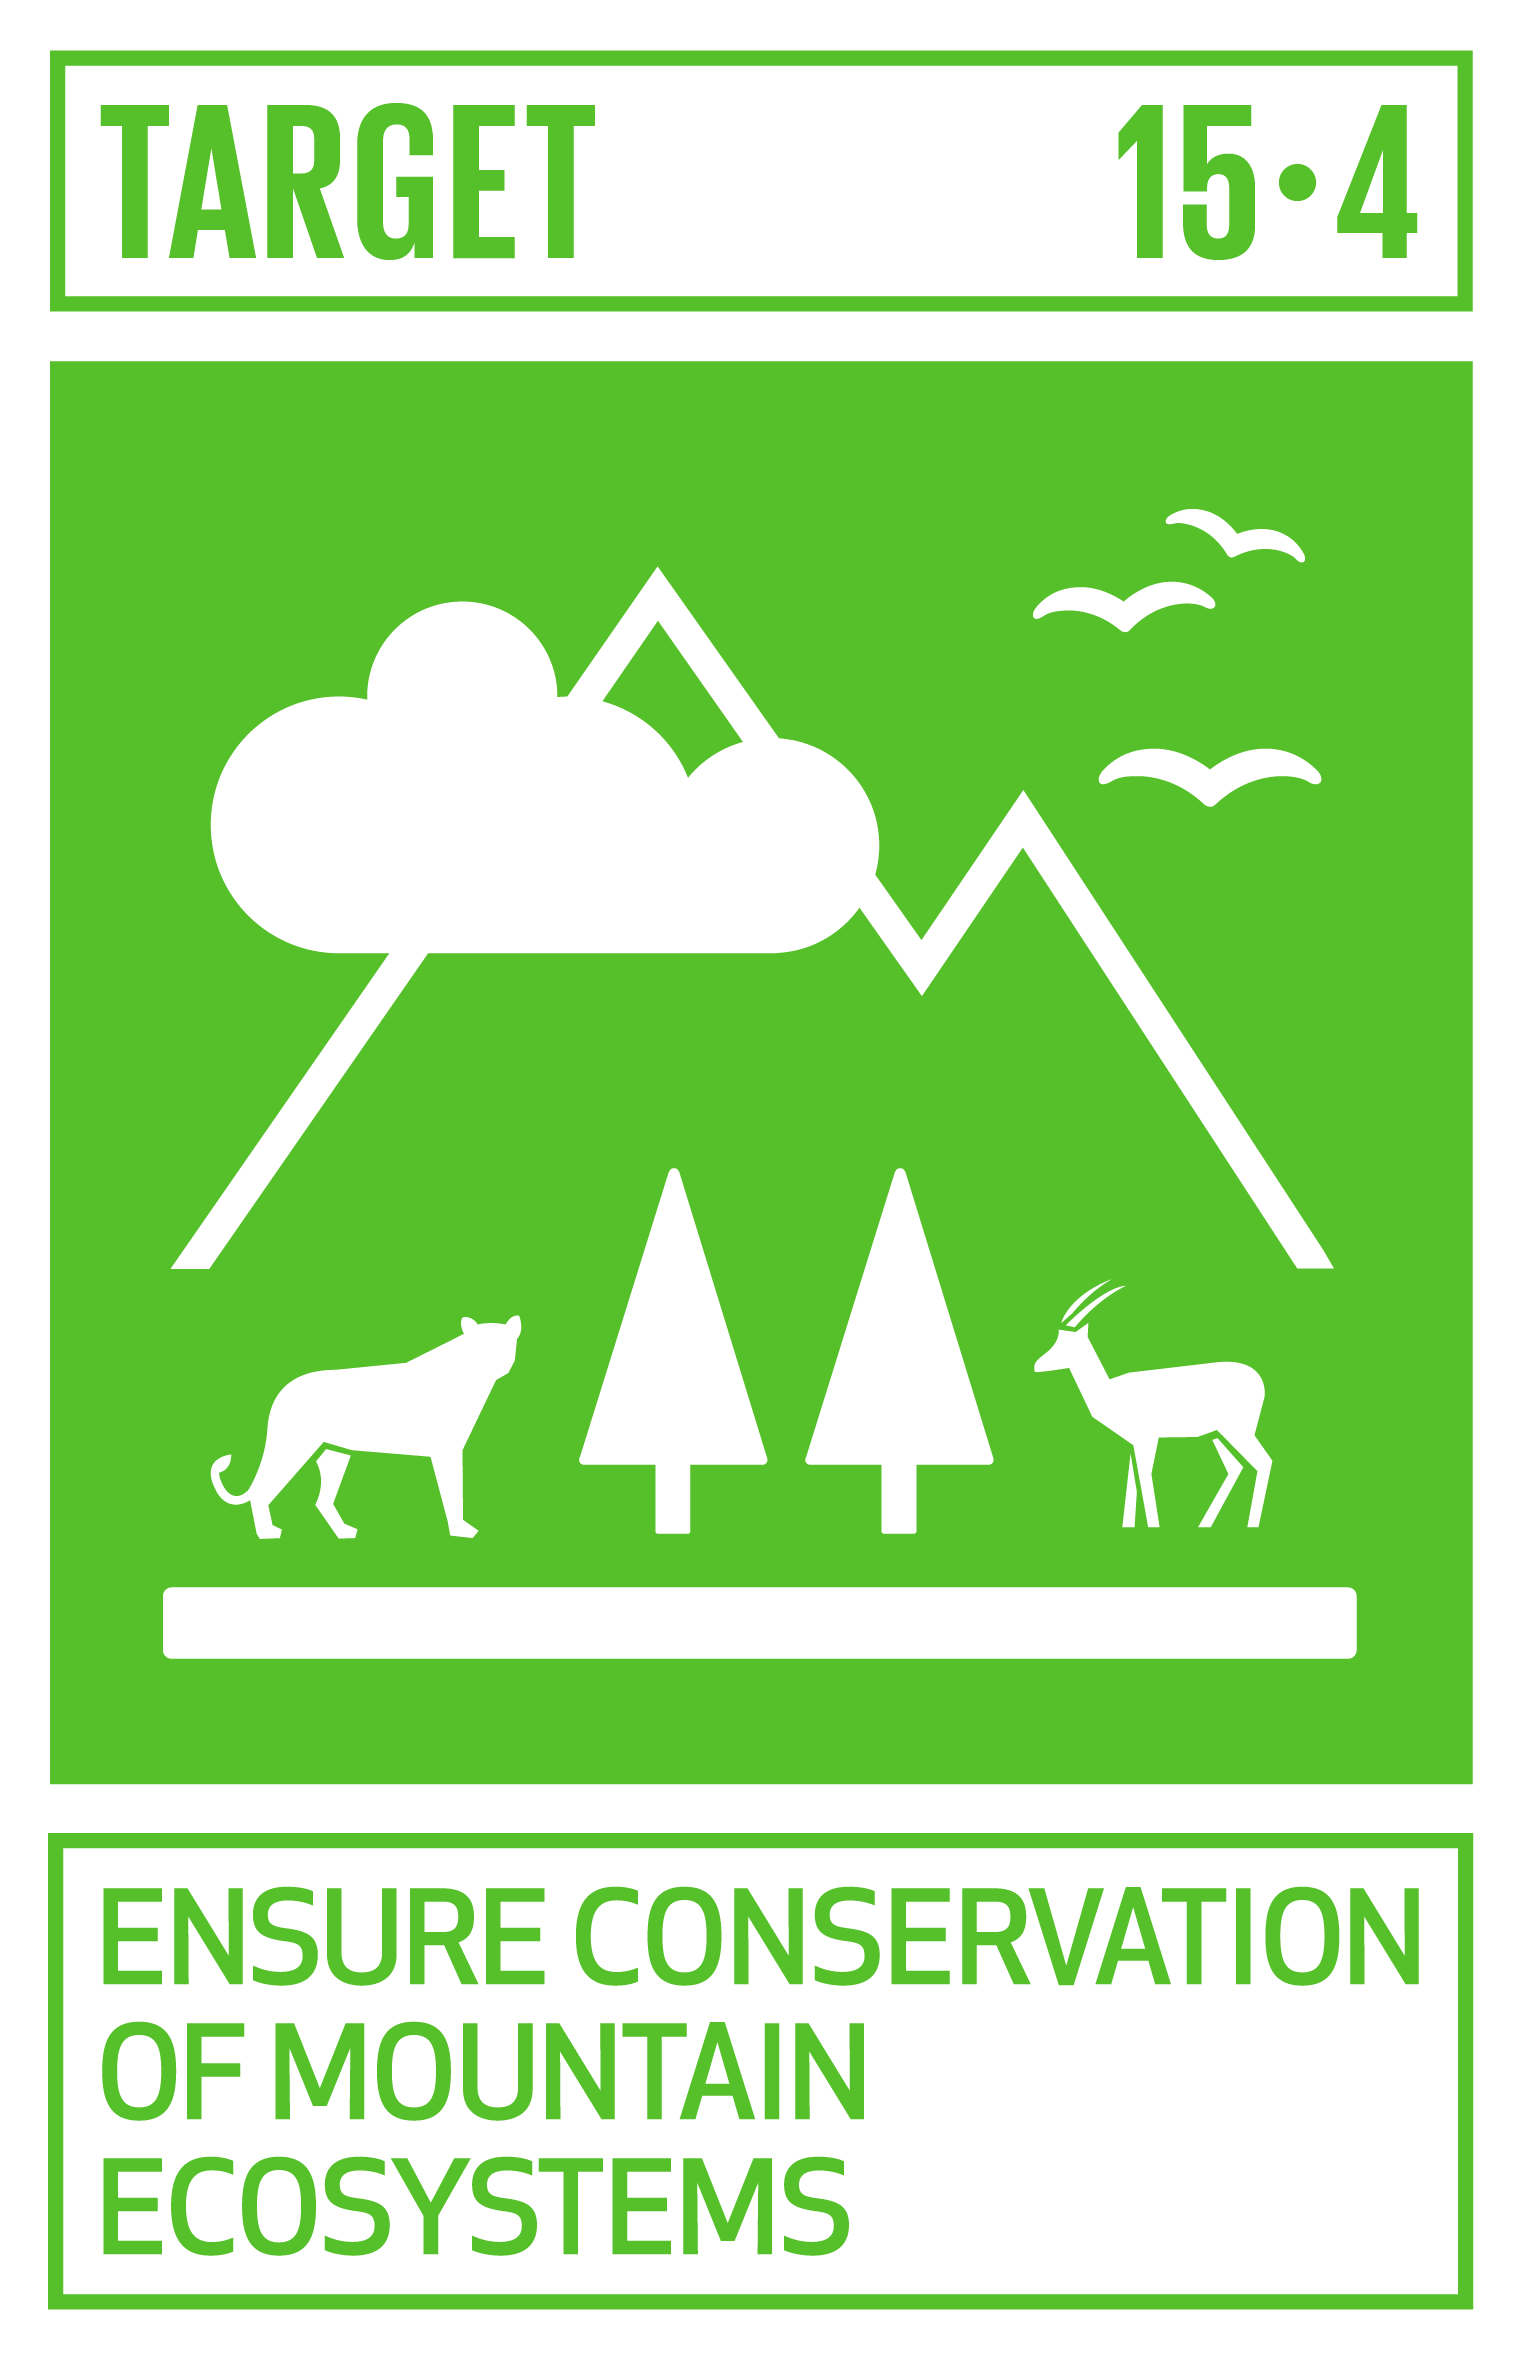 Goal,target,永續發展目標SDGs15,目標15.4確保山區生態系統的保護